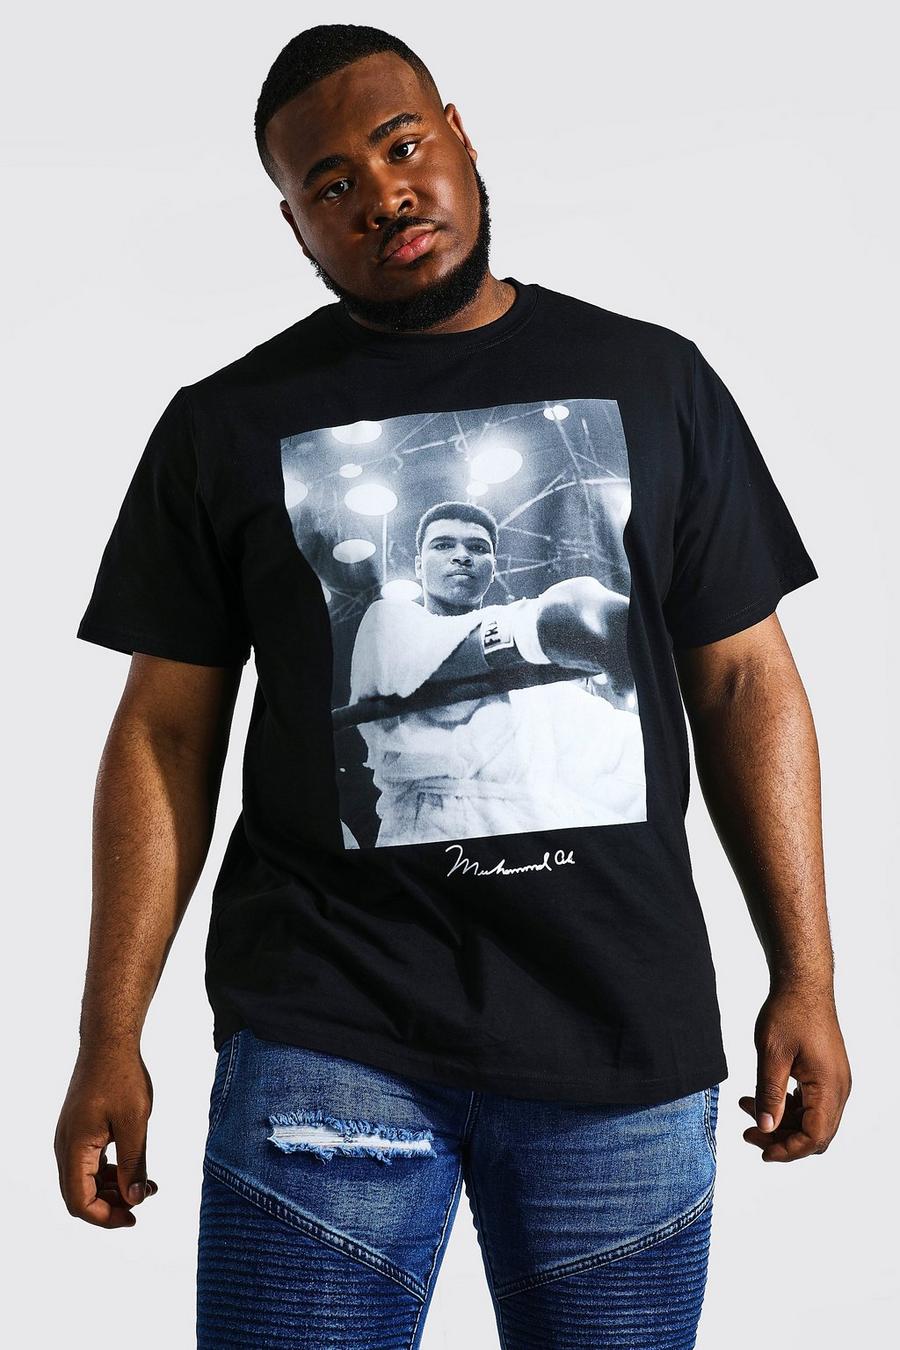 educator Performance Pekkadillo Plus Muhammad Ali Photo License T-shirt | boohoo